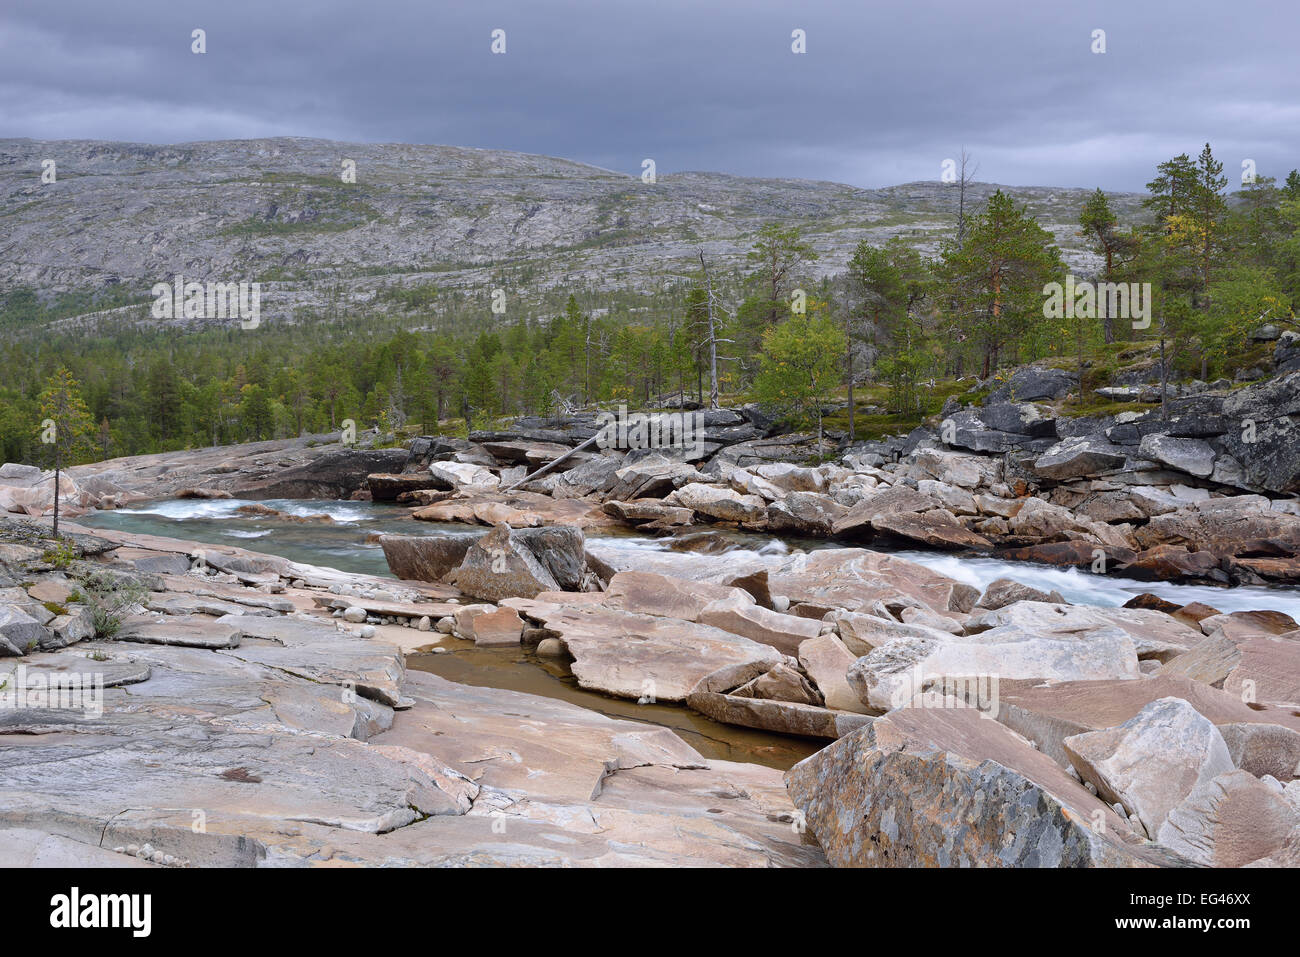 RMuonosjåhkå mountain river in SaRMtdaRM, near the Arctic CircRMe, Norway Stock Photo